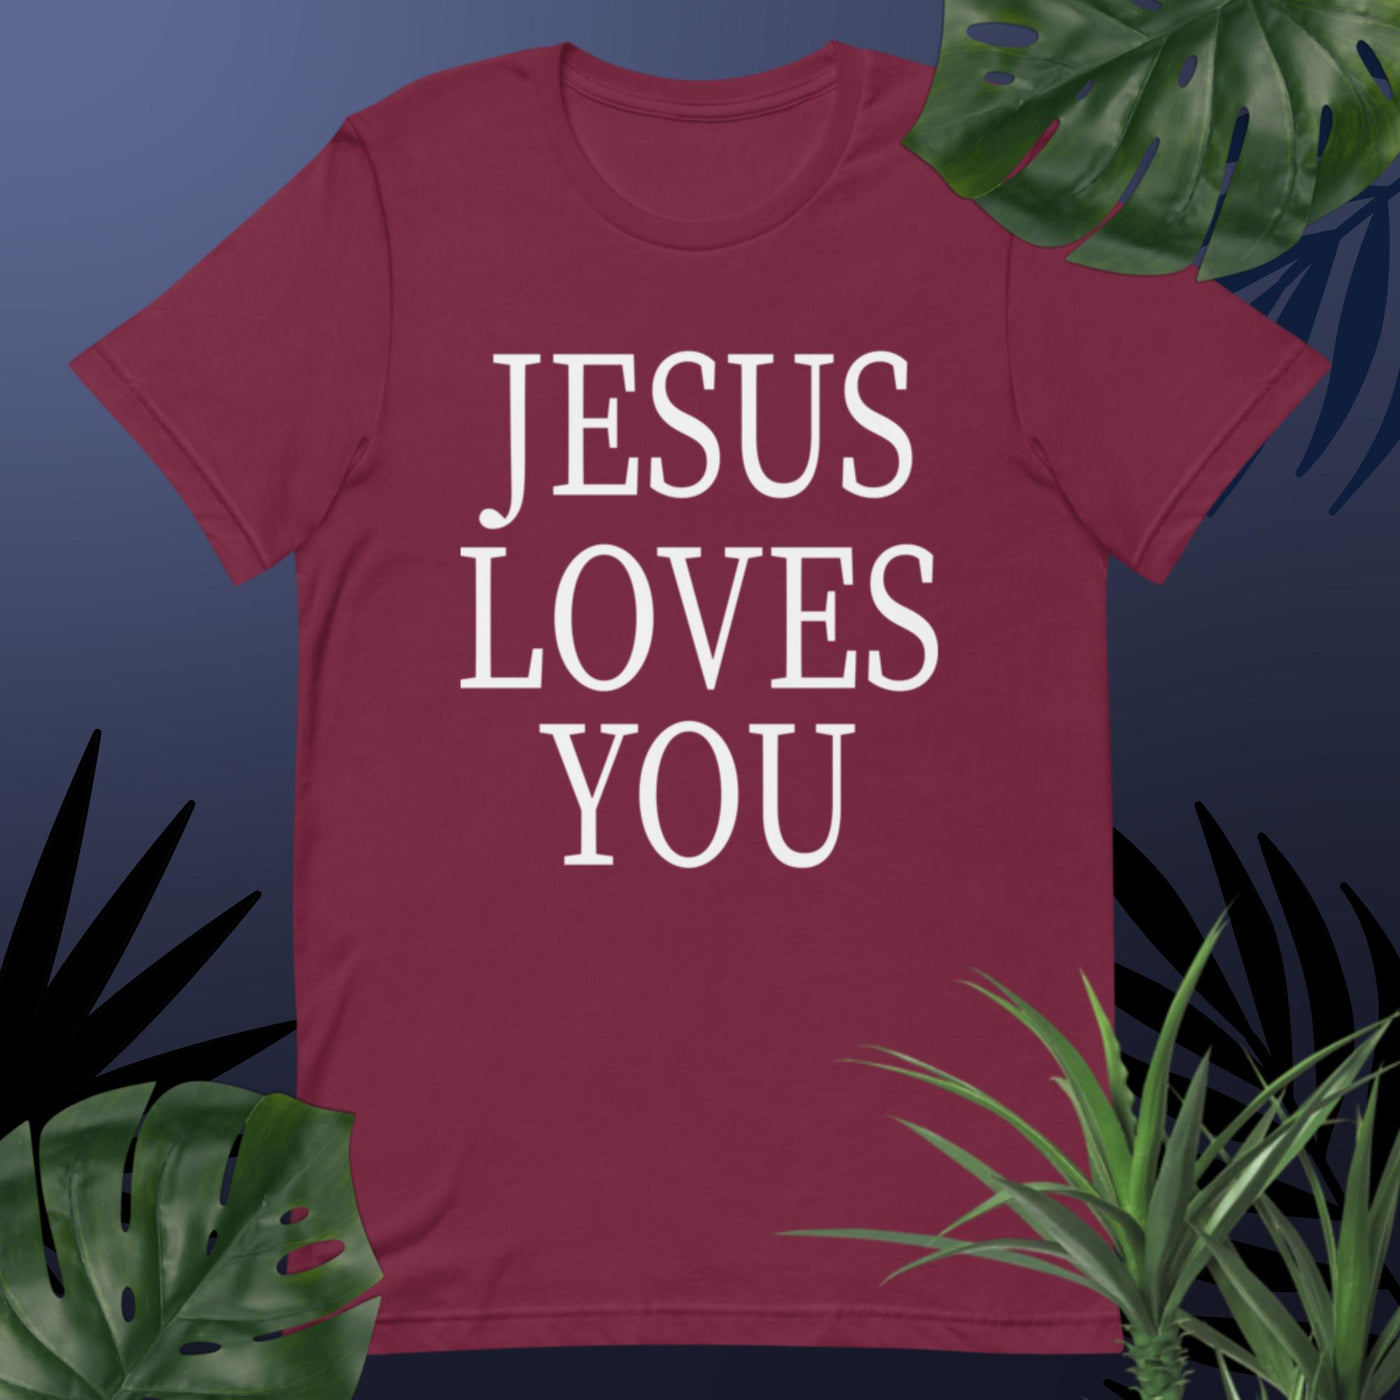 F&H Christian Jesus Loves You T-shirt